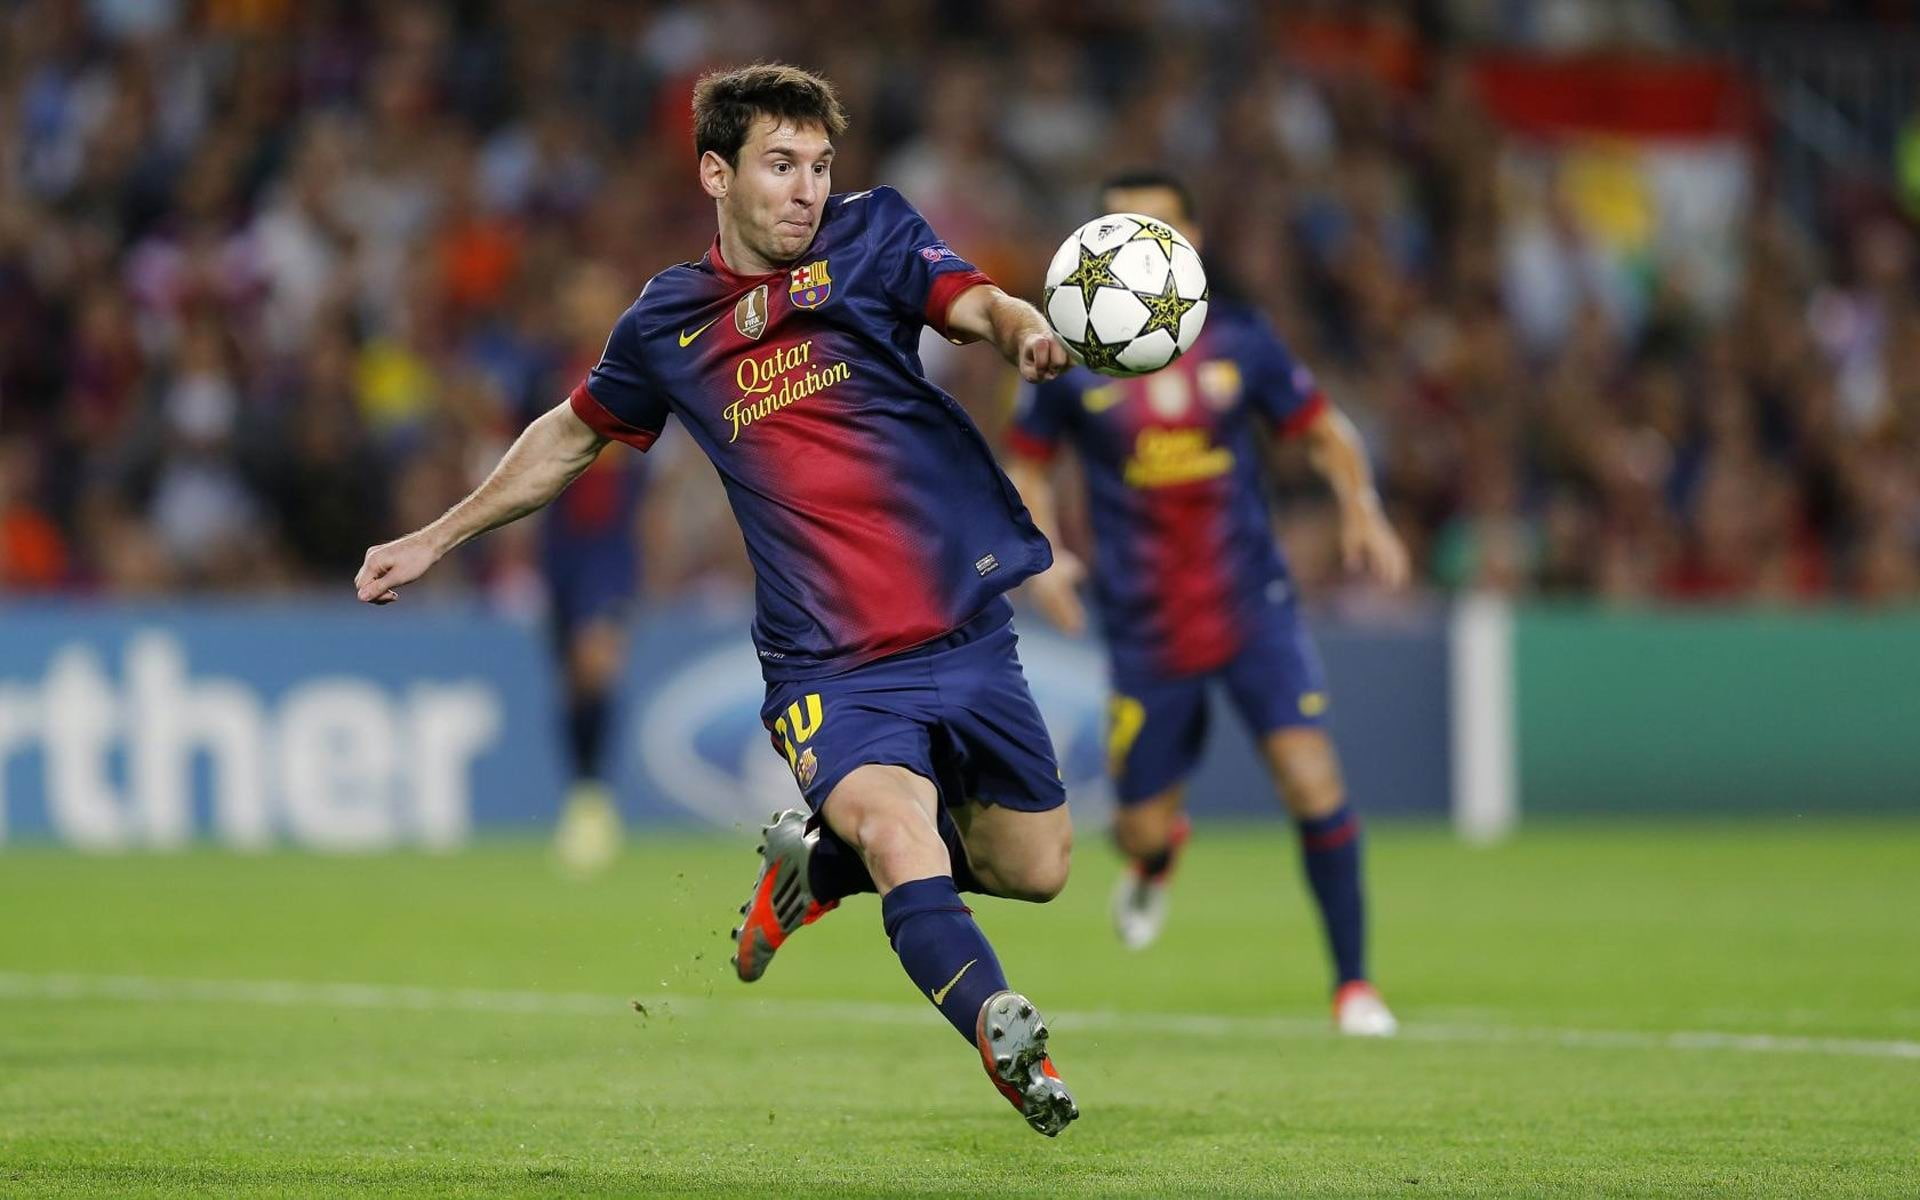 lionel messi-Football moment HD Wallpaper, Lionel Messi, sport